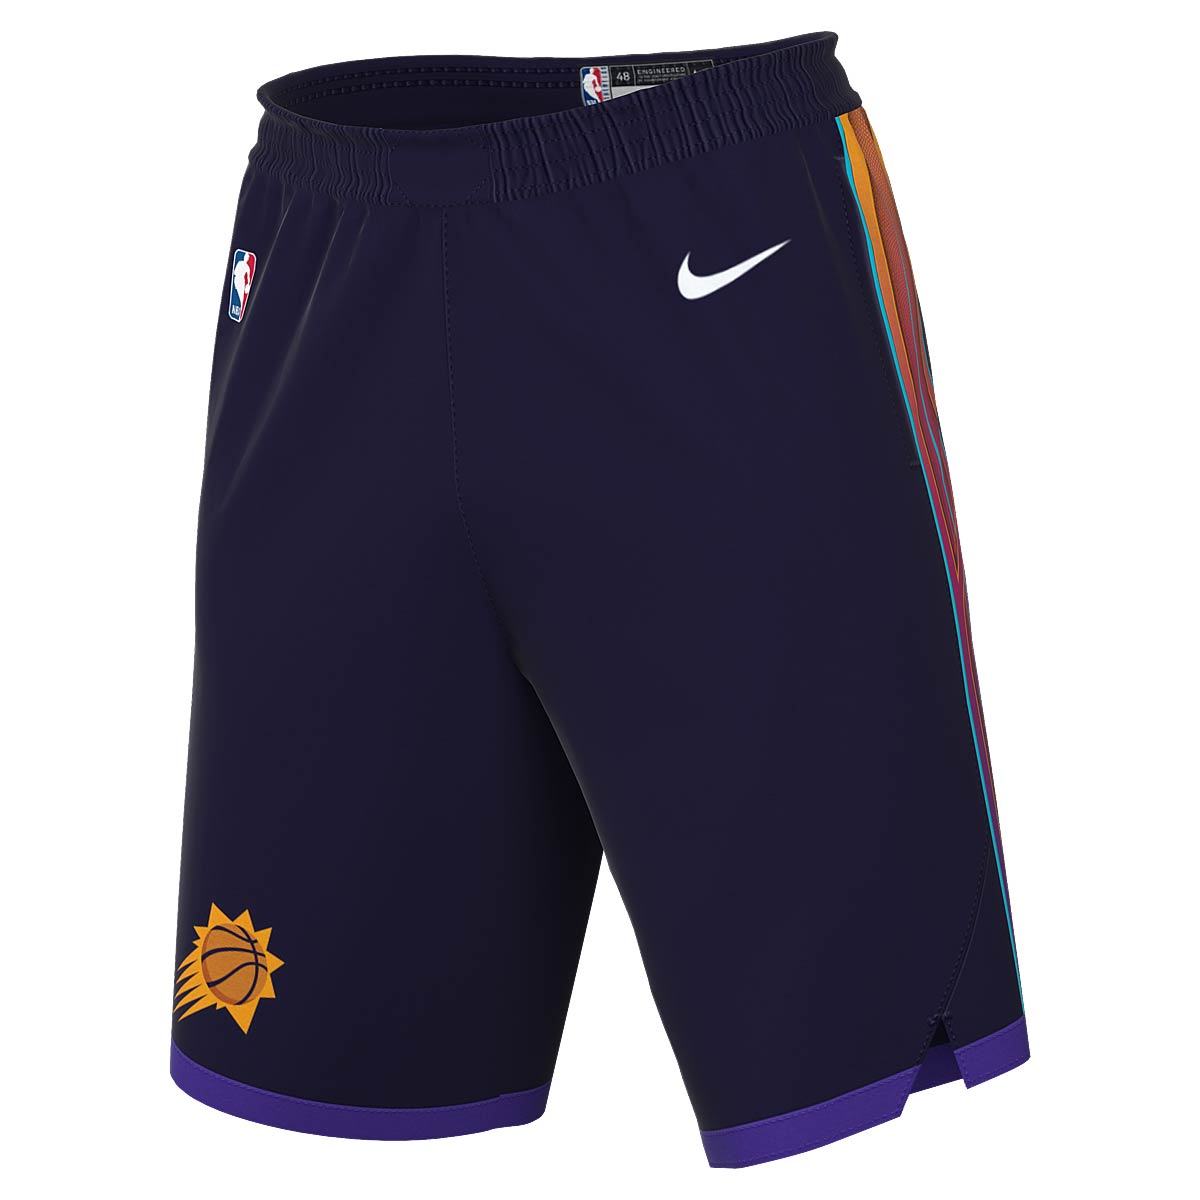 Nike NBA Phoenix Suns Dri-fit City Edition Swingman Shorts, Ink/white S